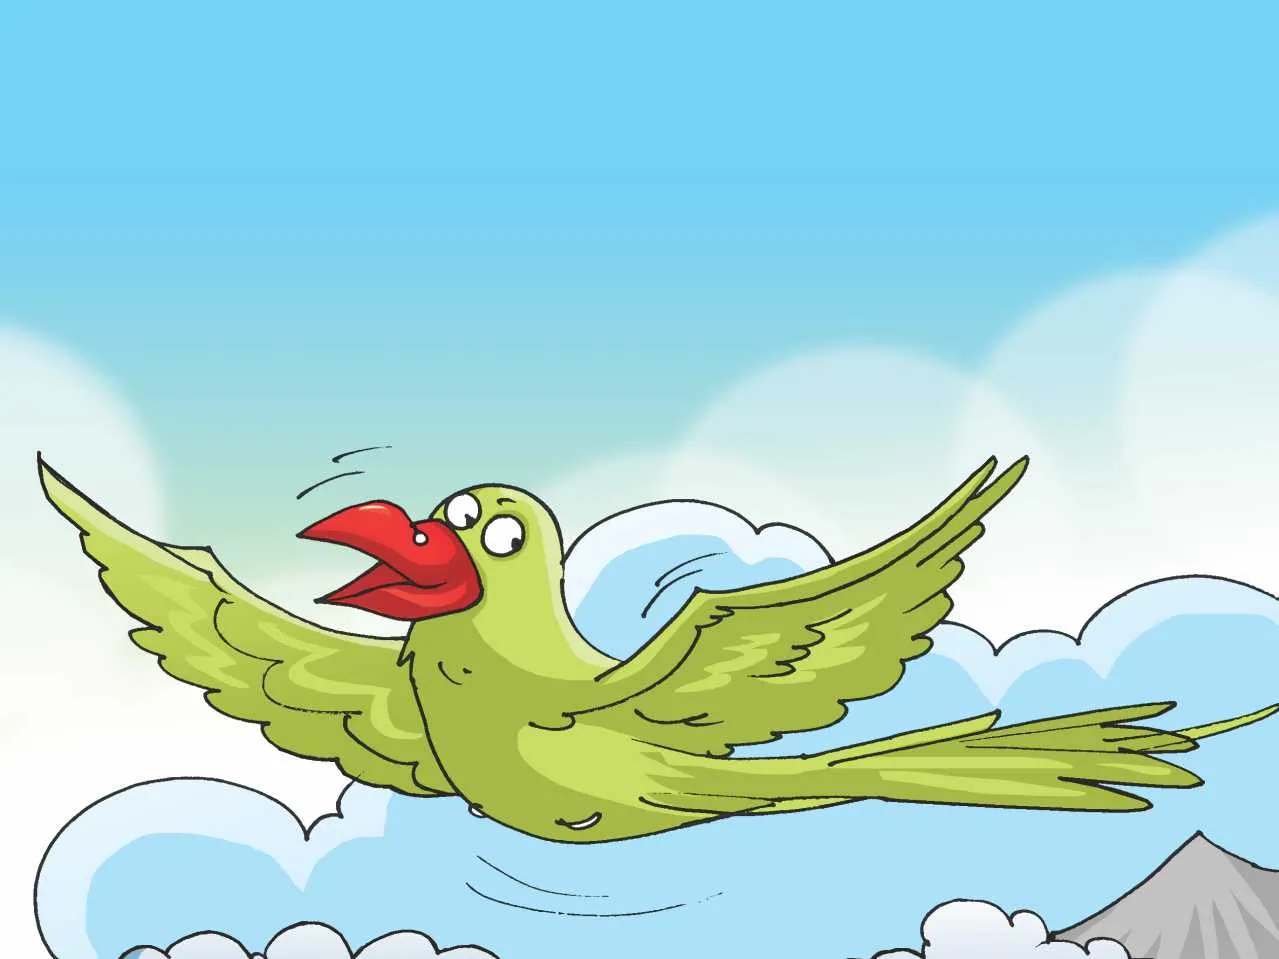 Parrot flying in sky cartoon image